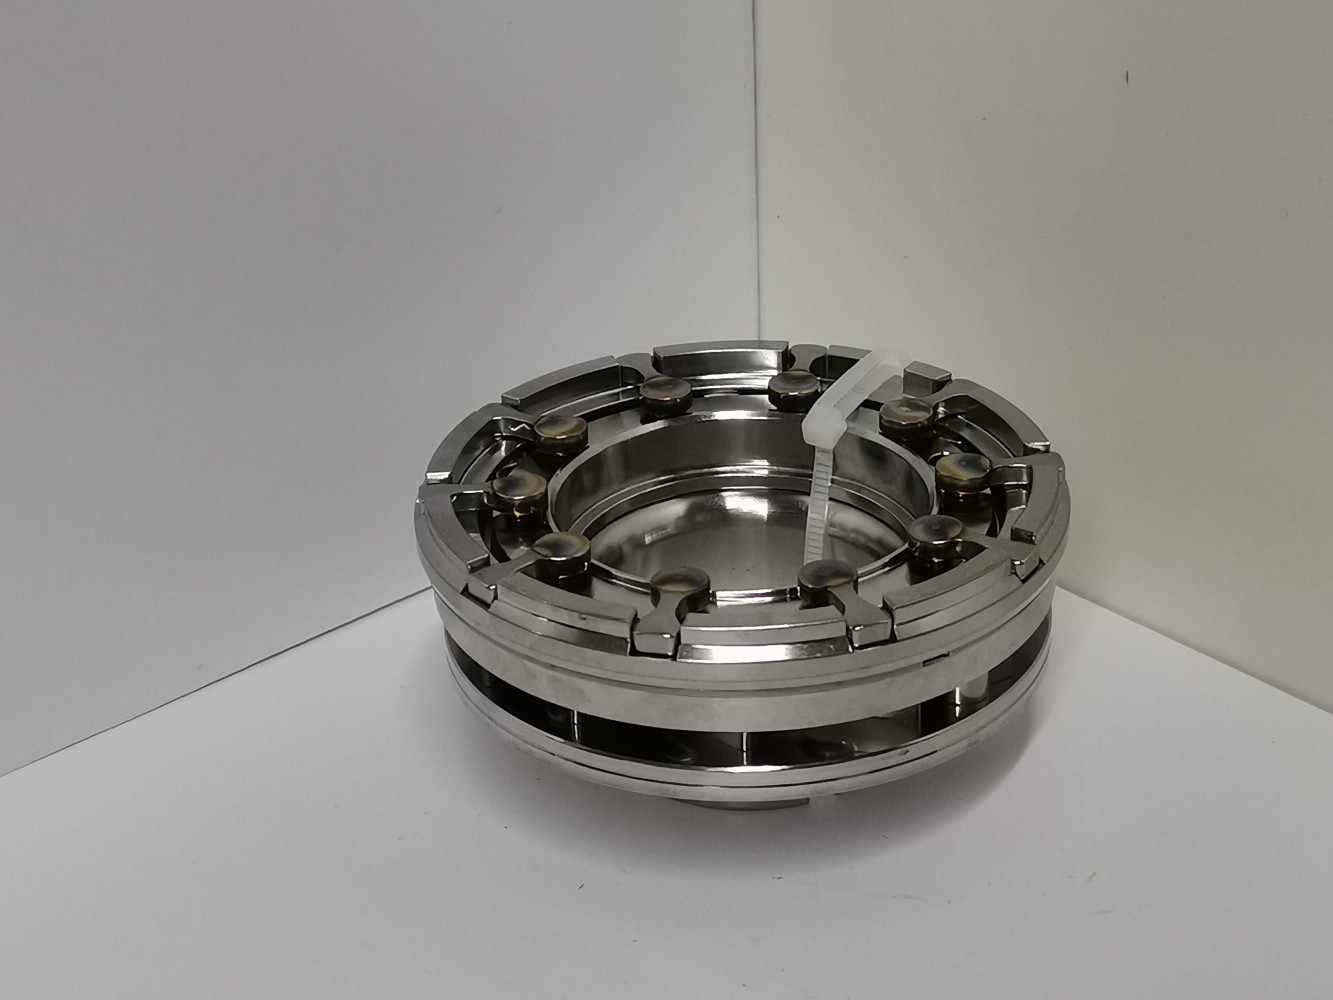 NR-D2TP-0085 NR-D2TP-0085 Nozzle Ring | Geometrija | 5303-970-0122, 5303-970-0130, 5303-970-0132,  5303-970 D2 Turbo Parts 